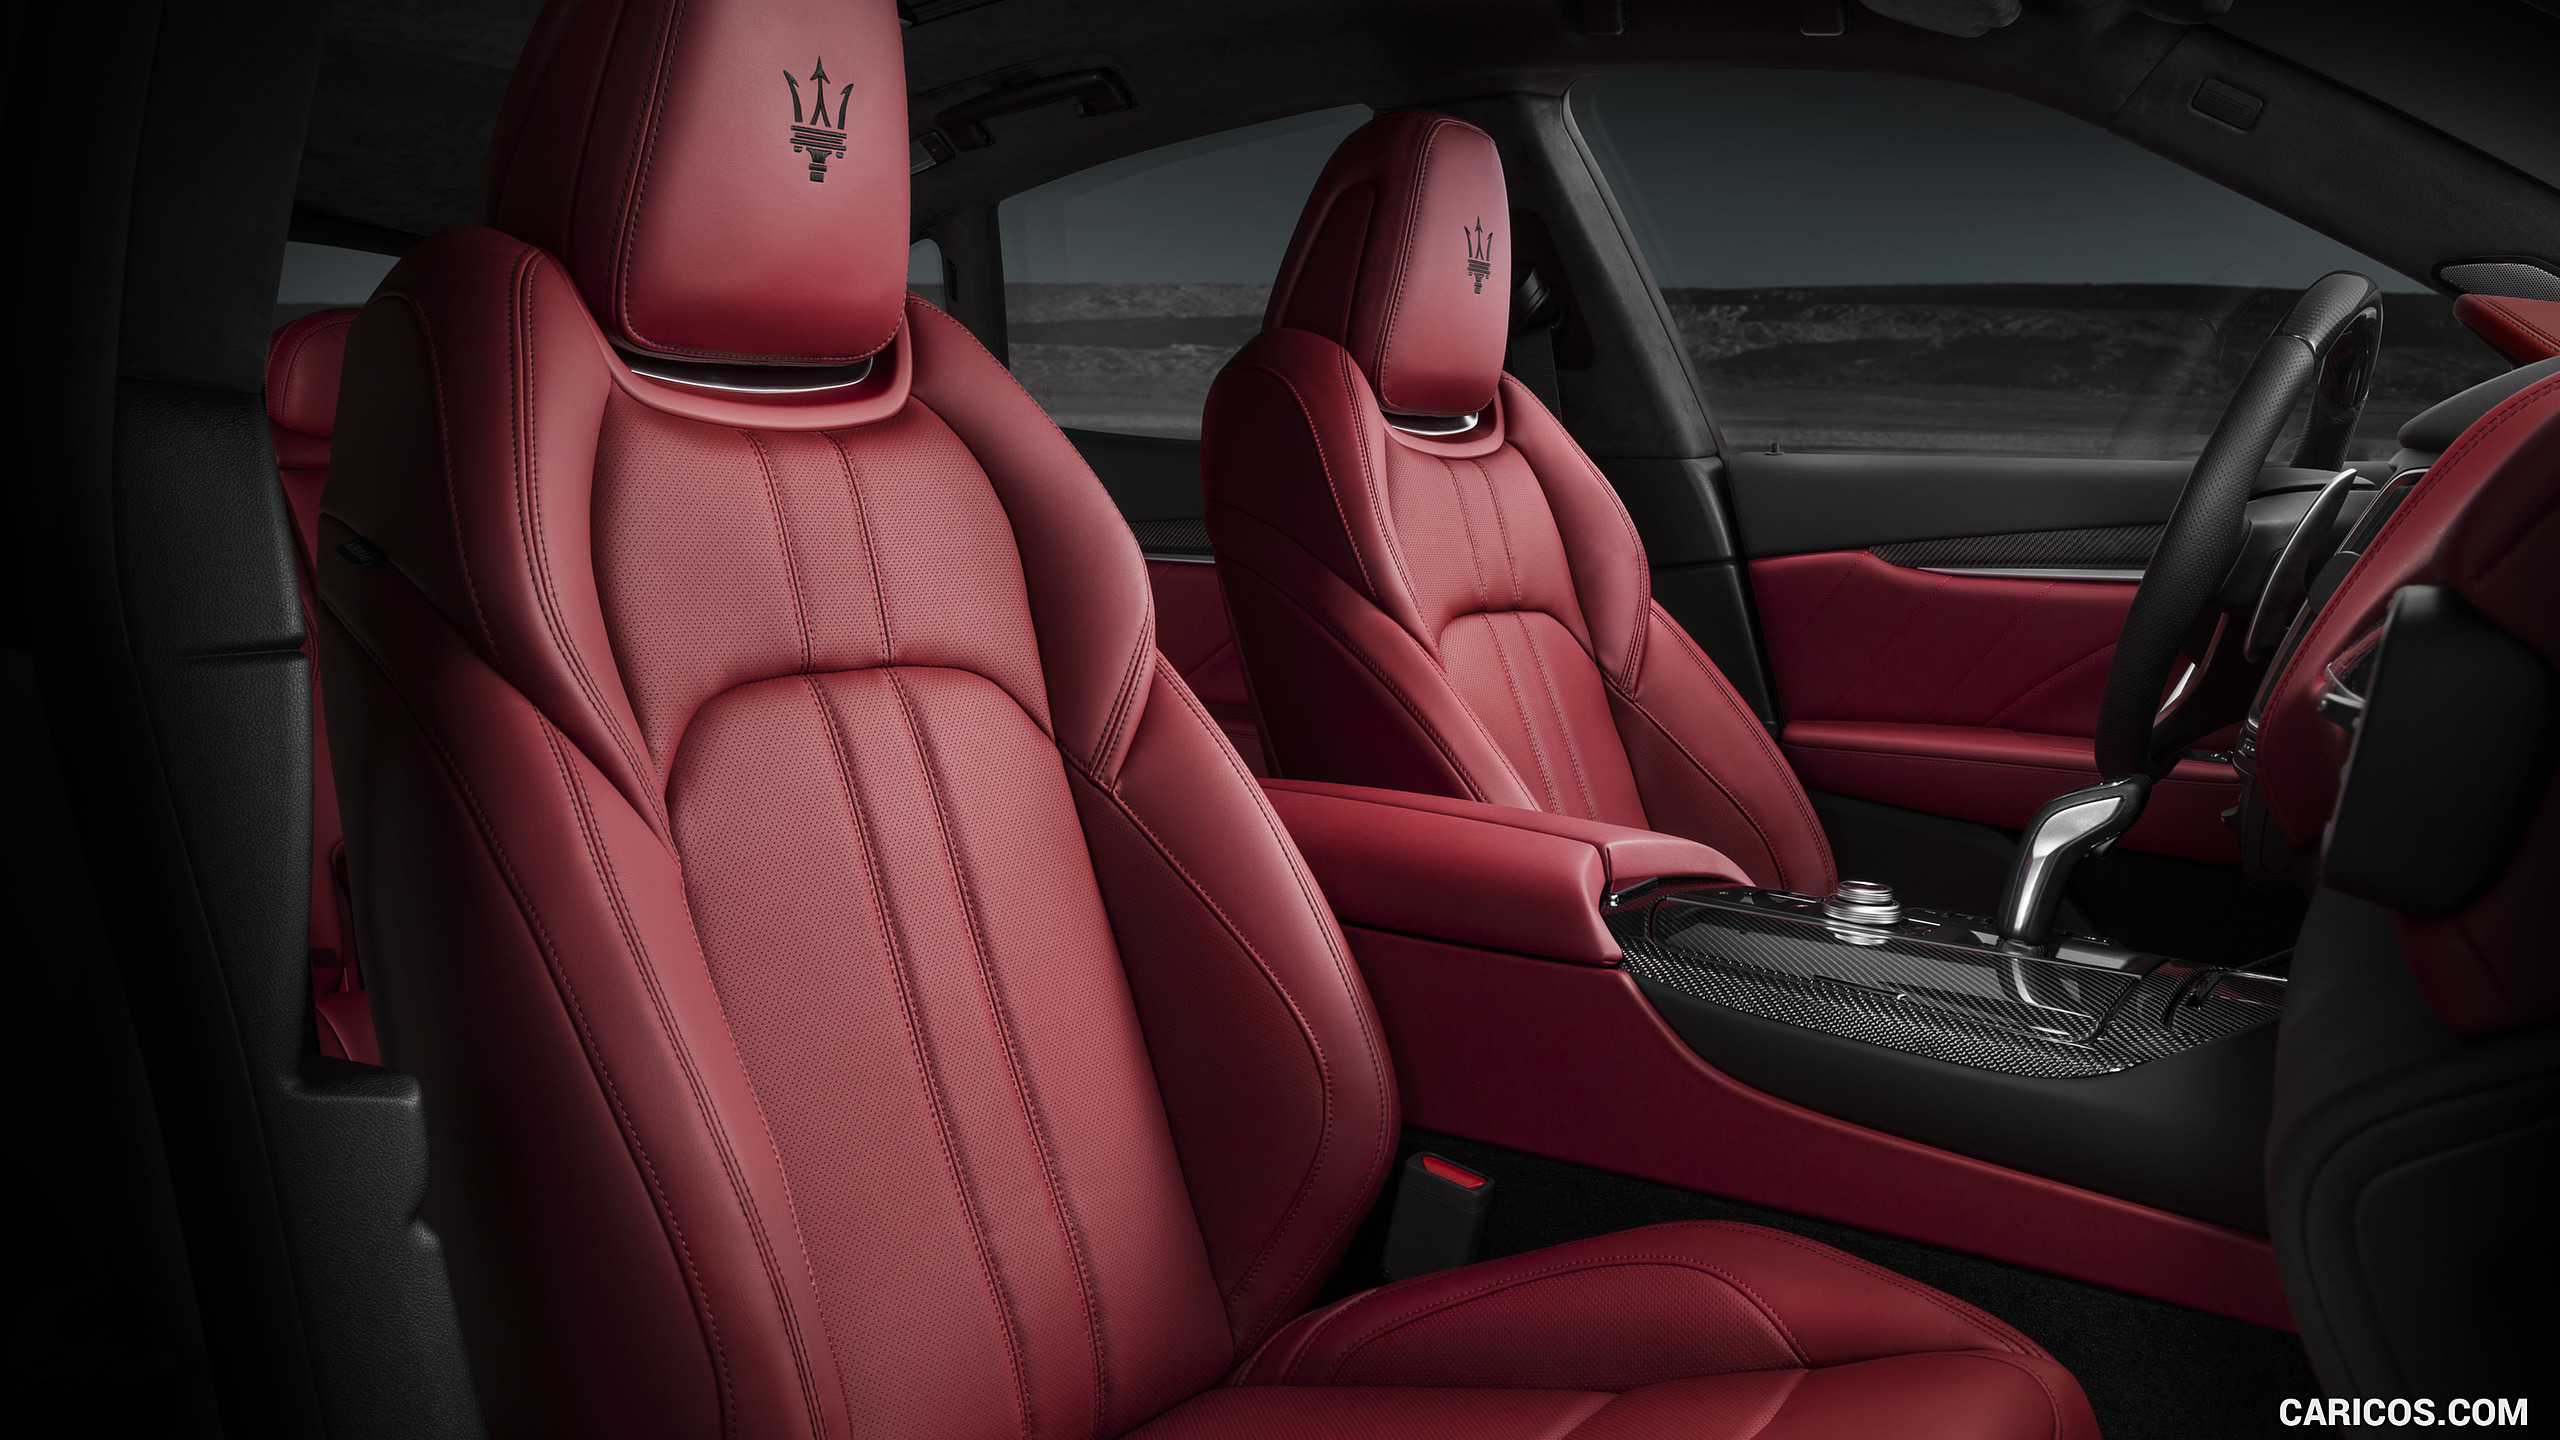 2019 Maserati Levante V8 GTS - Interior, Front Seats, #6 of 6